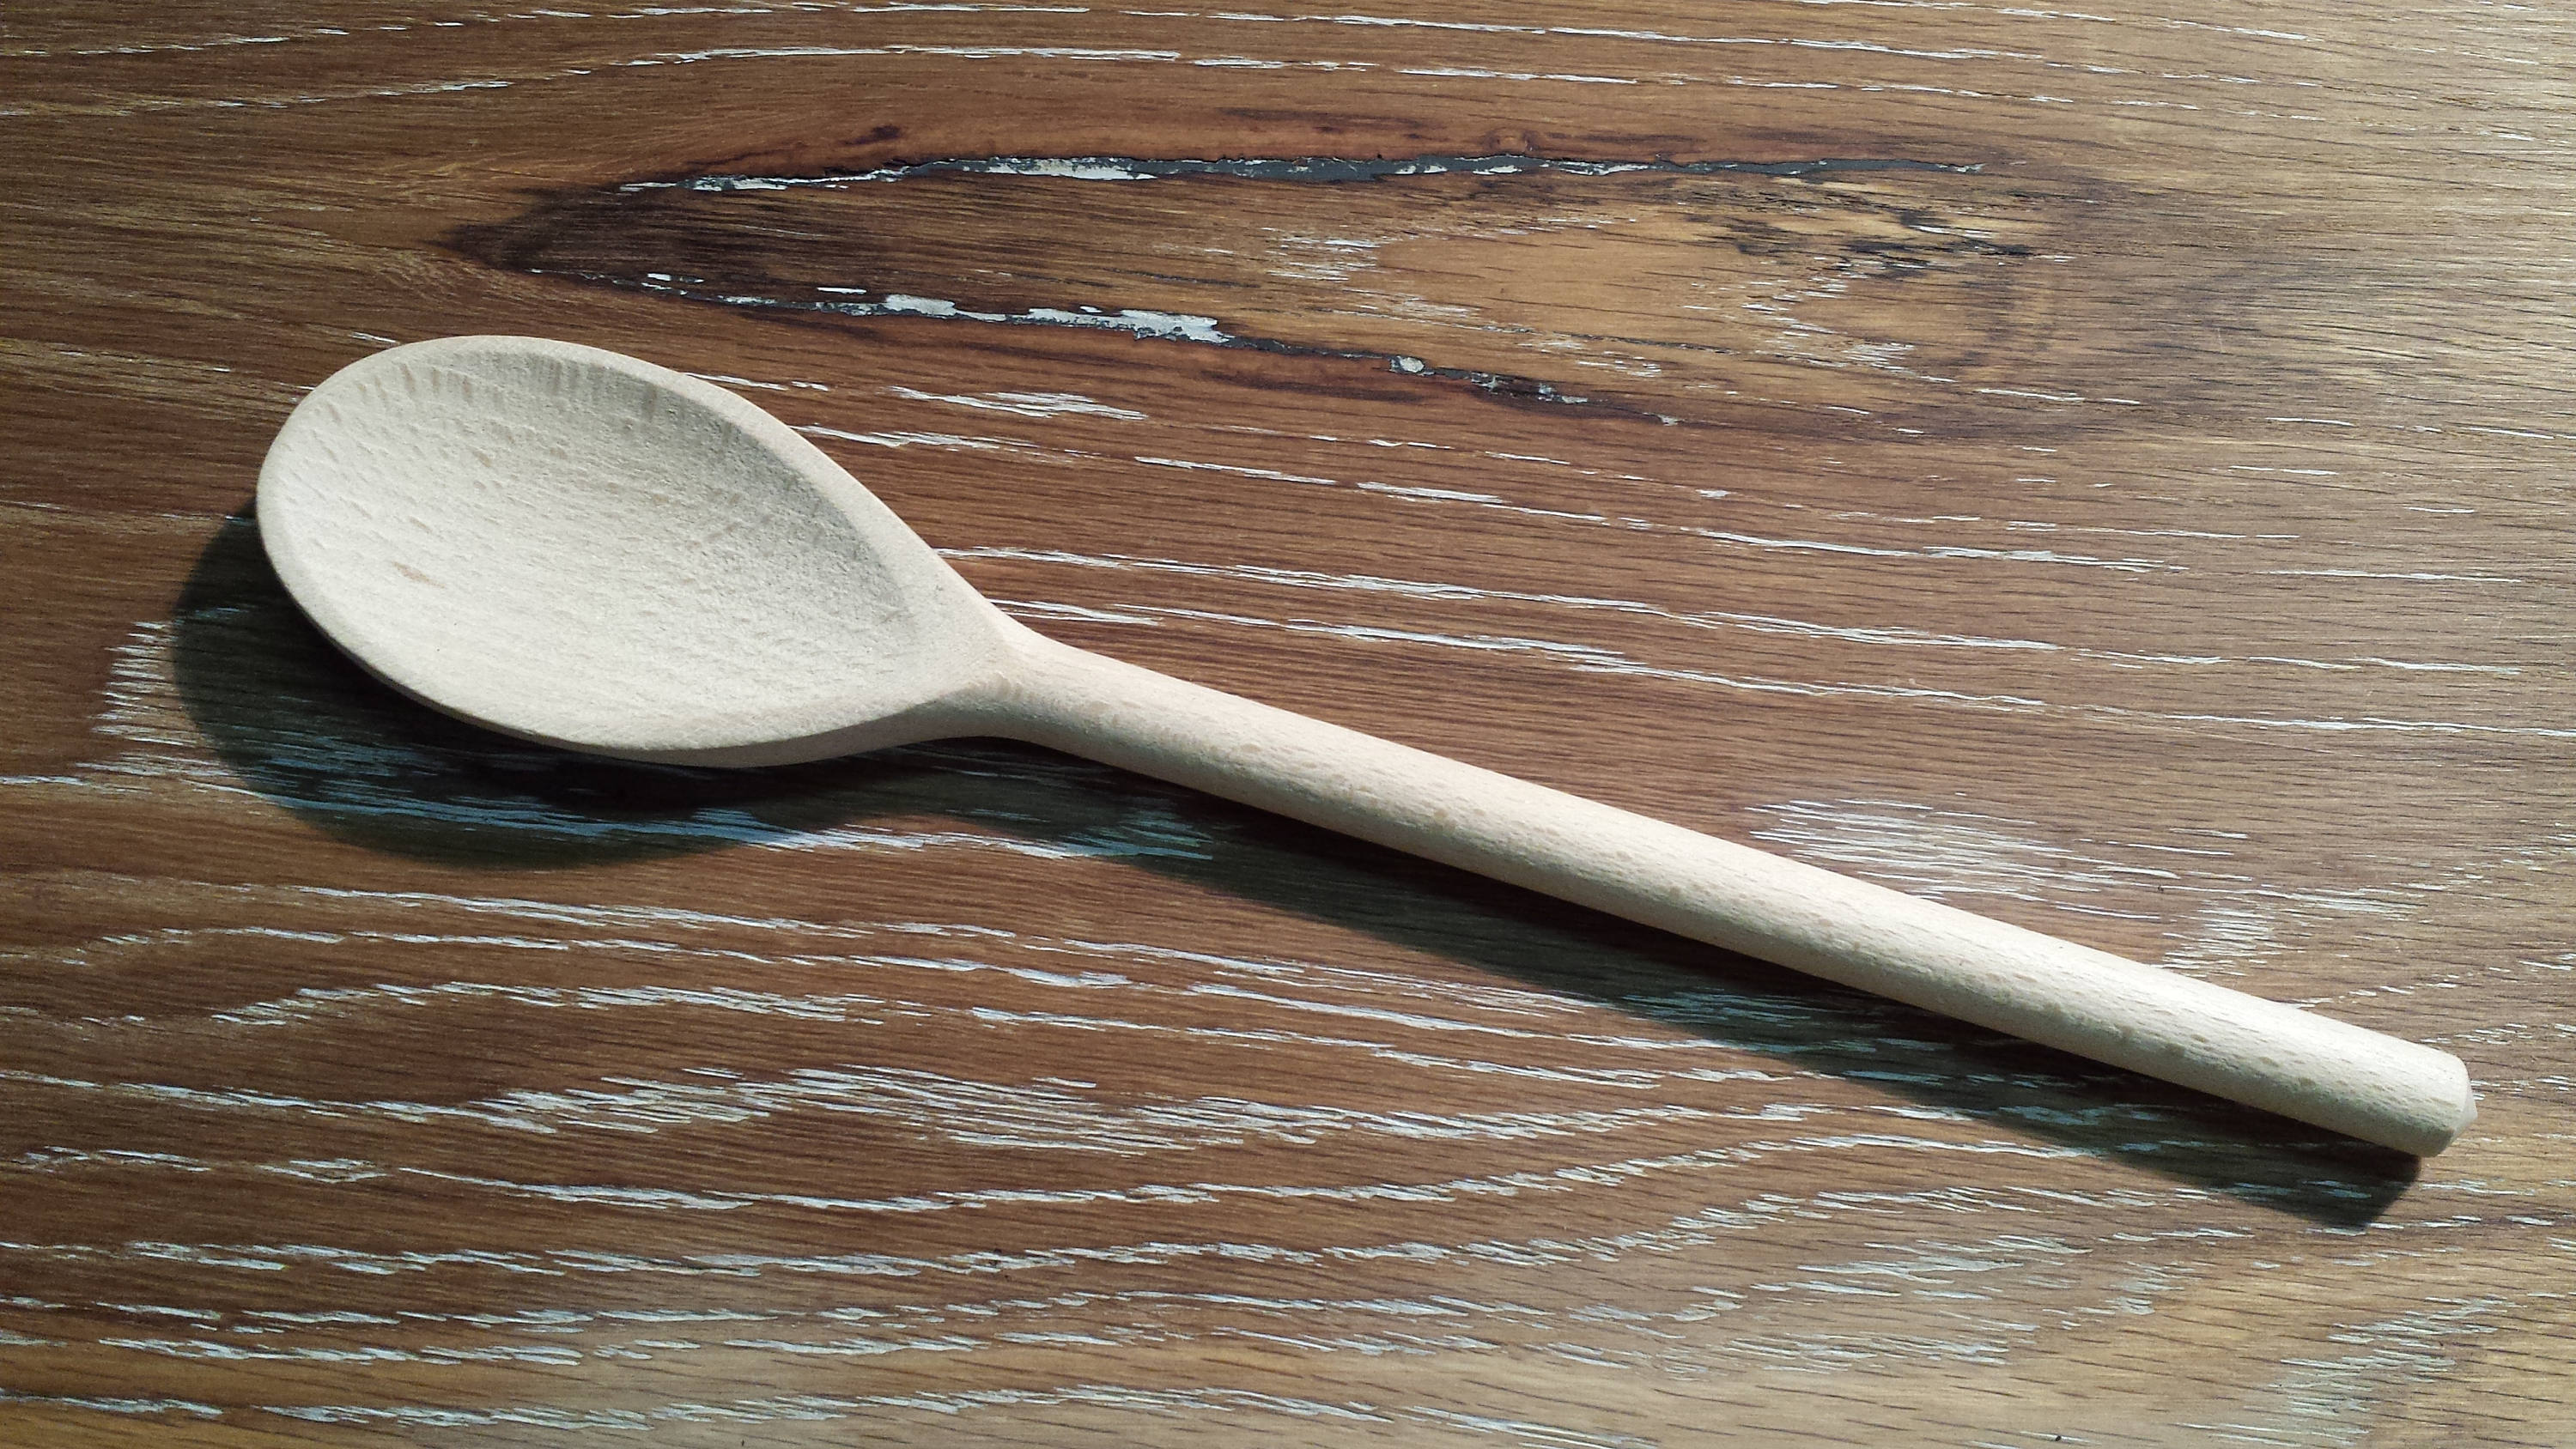 Ladle (spoon) - Wikipedia